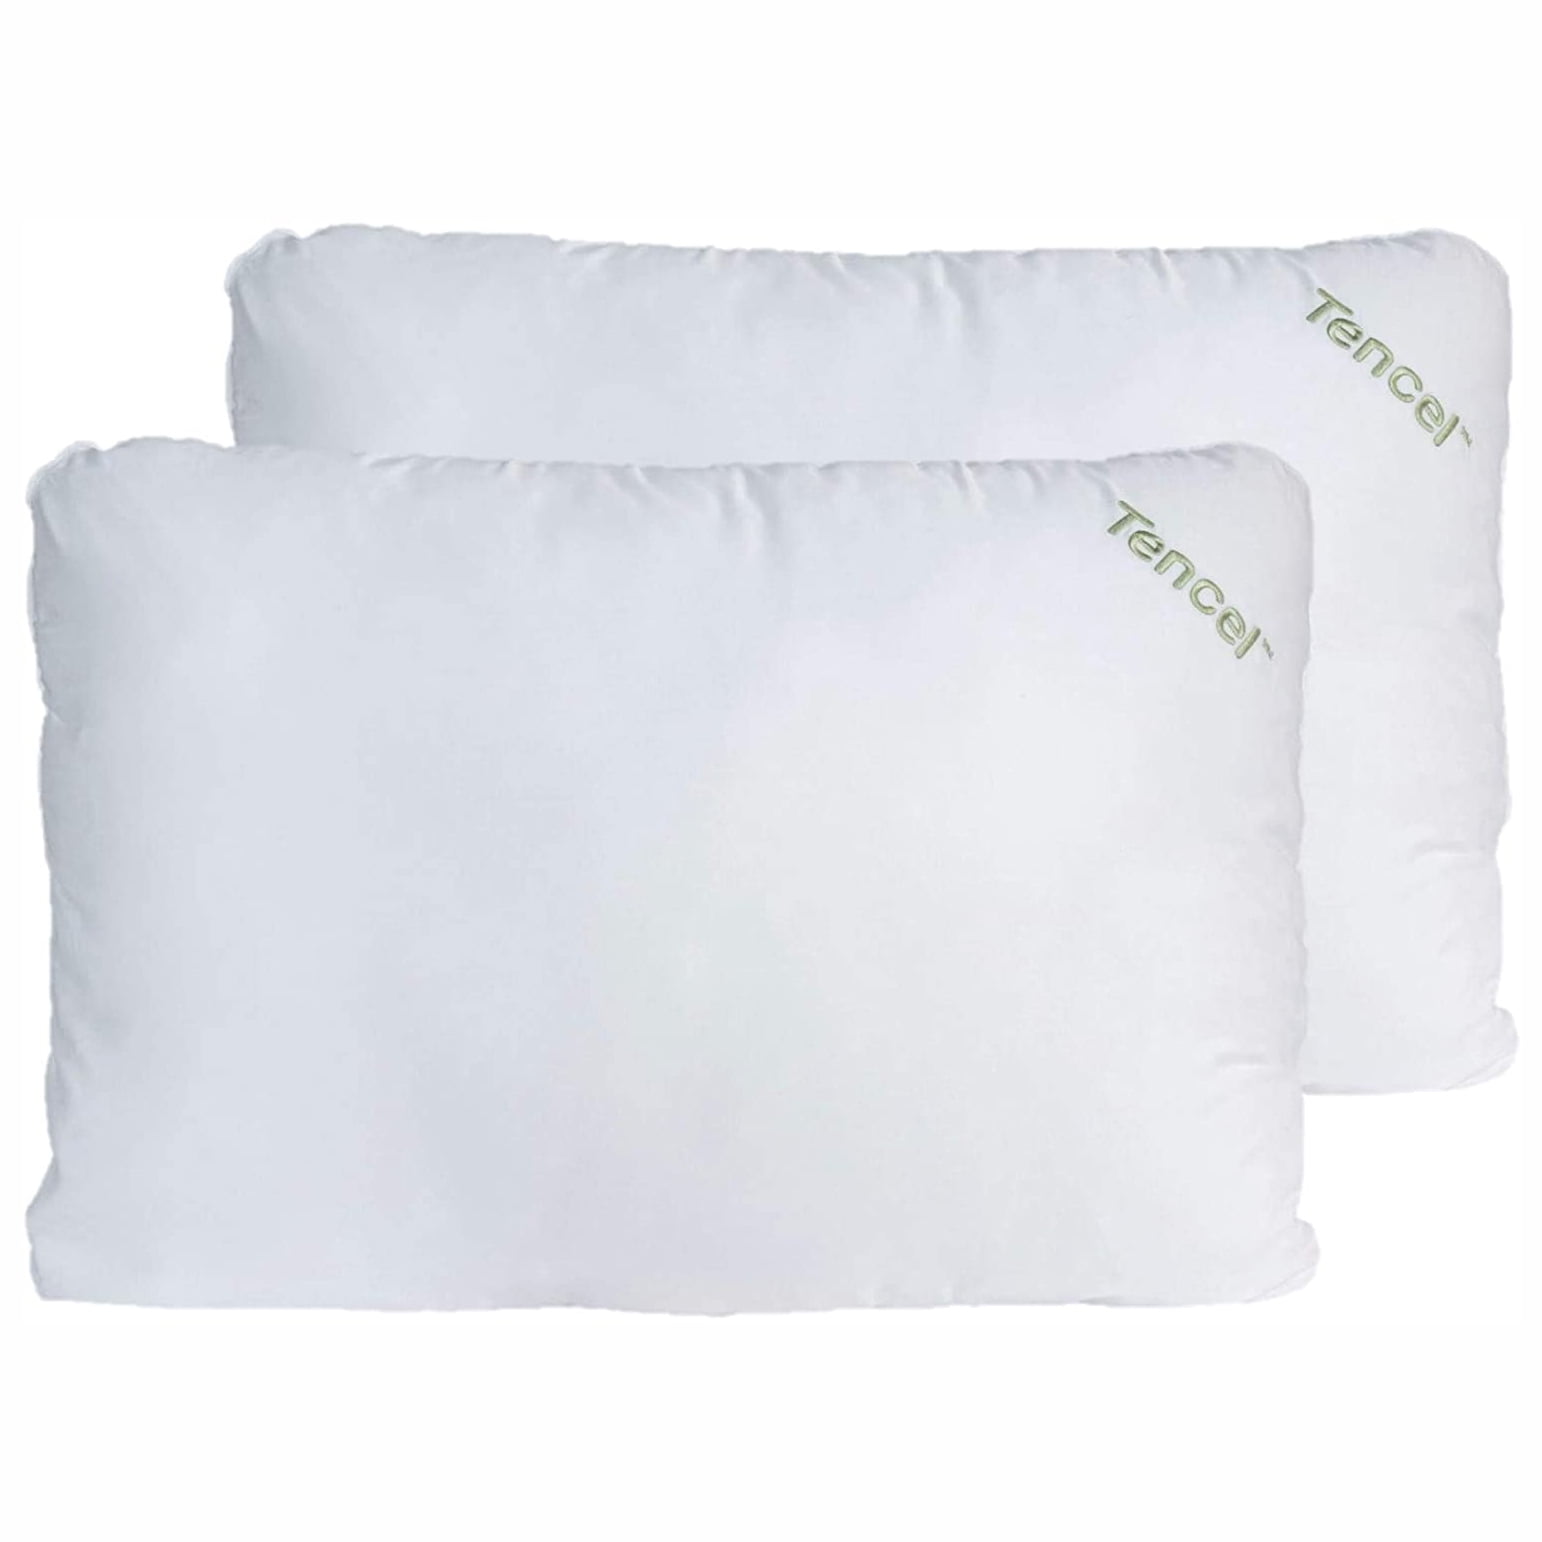 WQJNWEQ Clearance Beauty Thigh Pillow Plush Toy Beauty Thigh Napping Pillow  Funny Sleeping Pillow